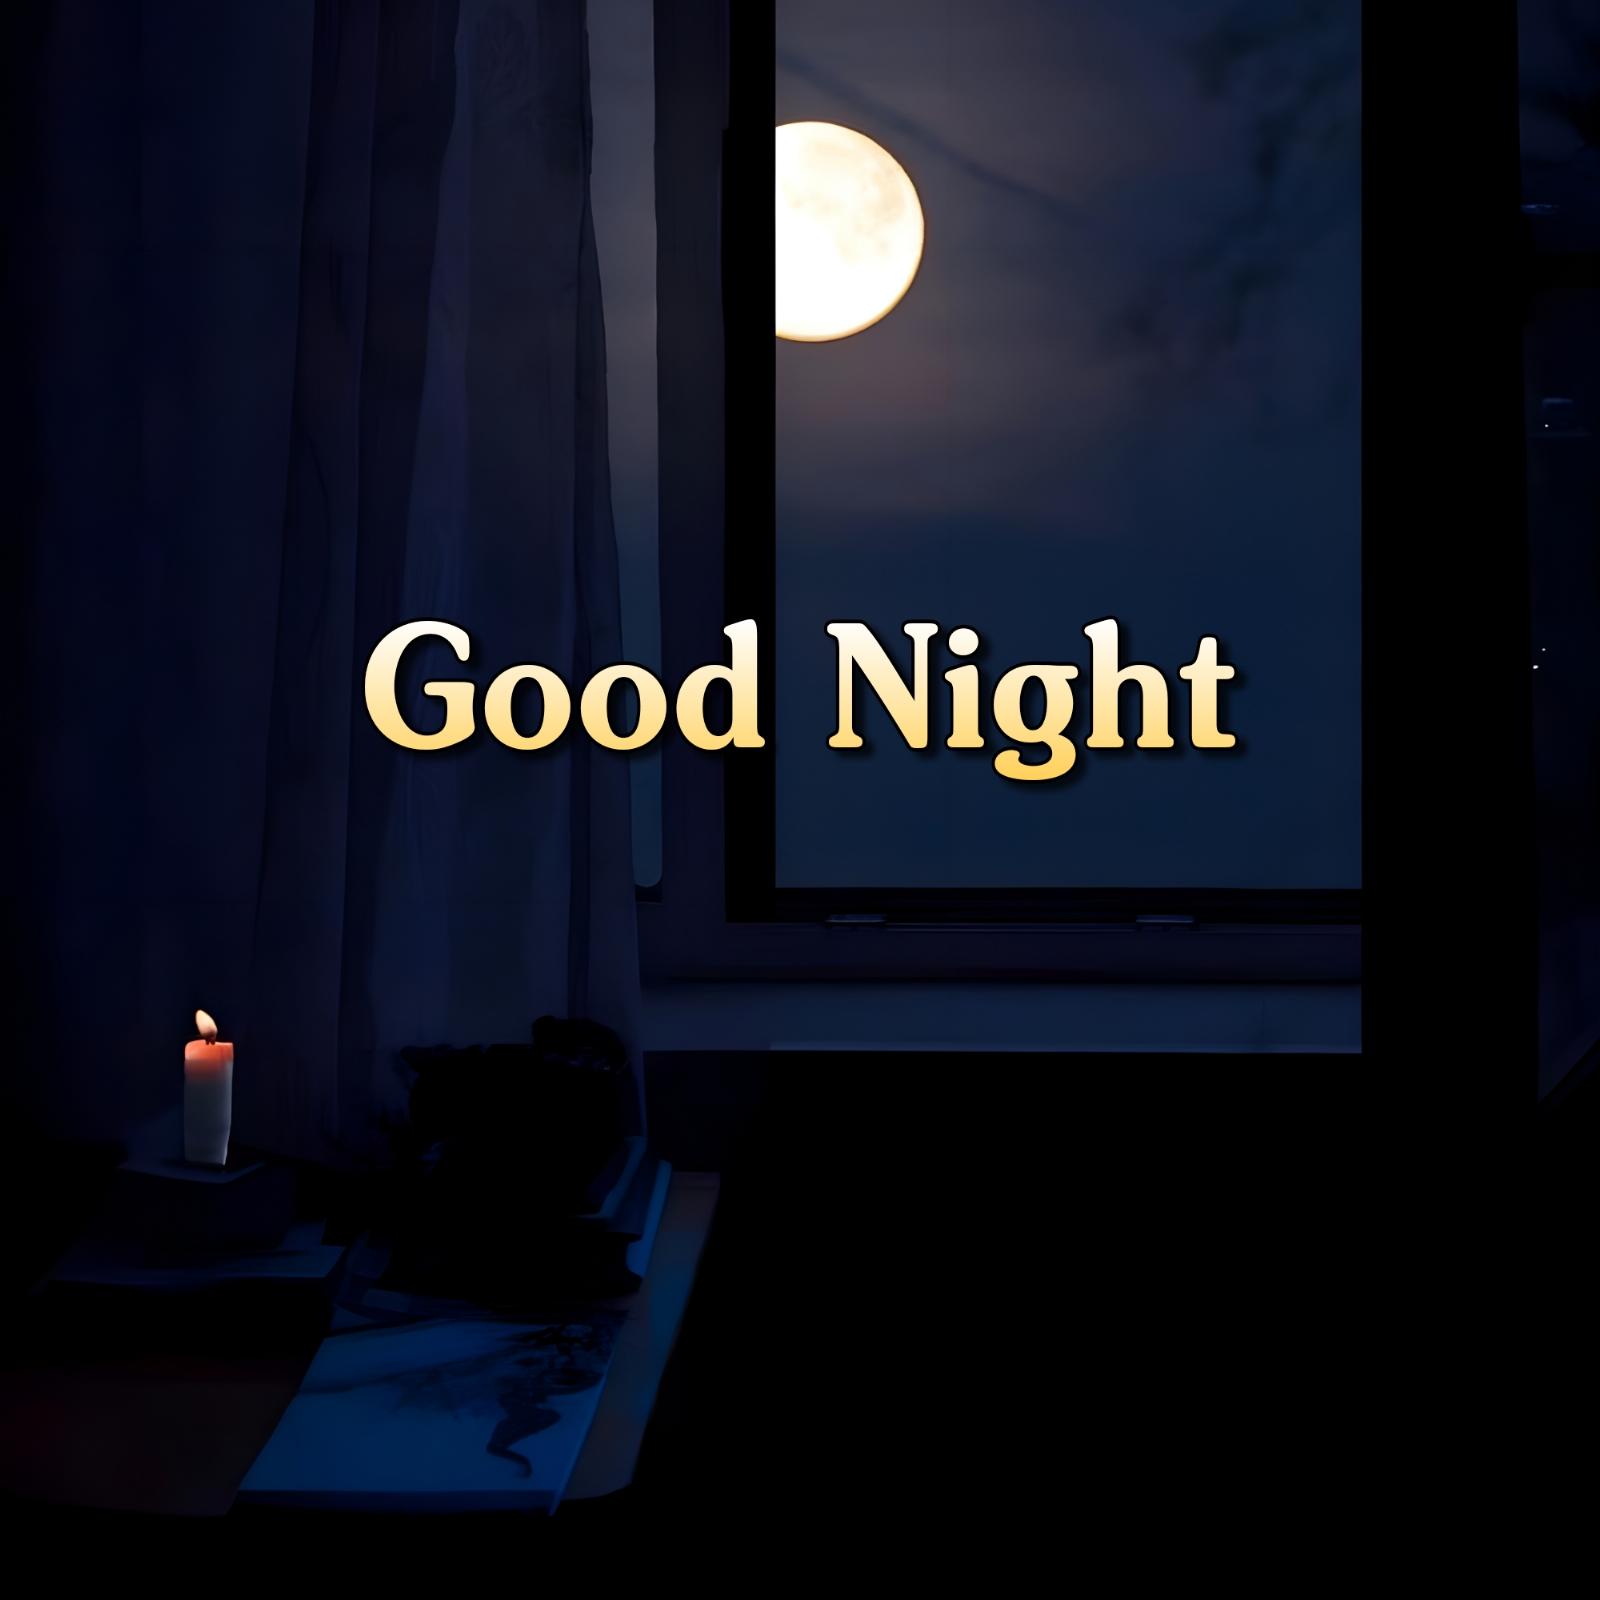 Moonlight Bedtime Full Moon Good Night Images